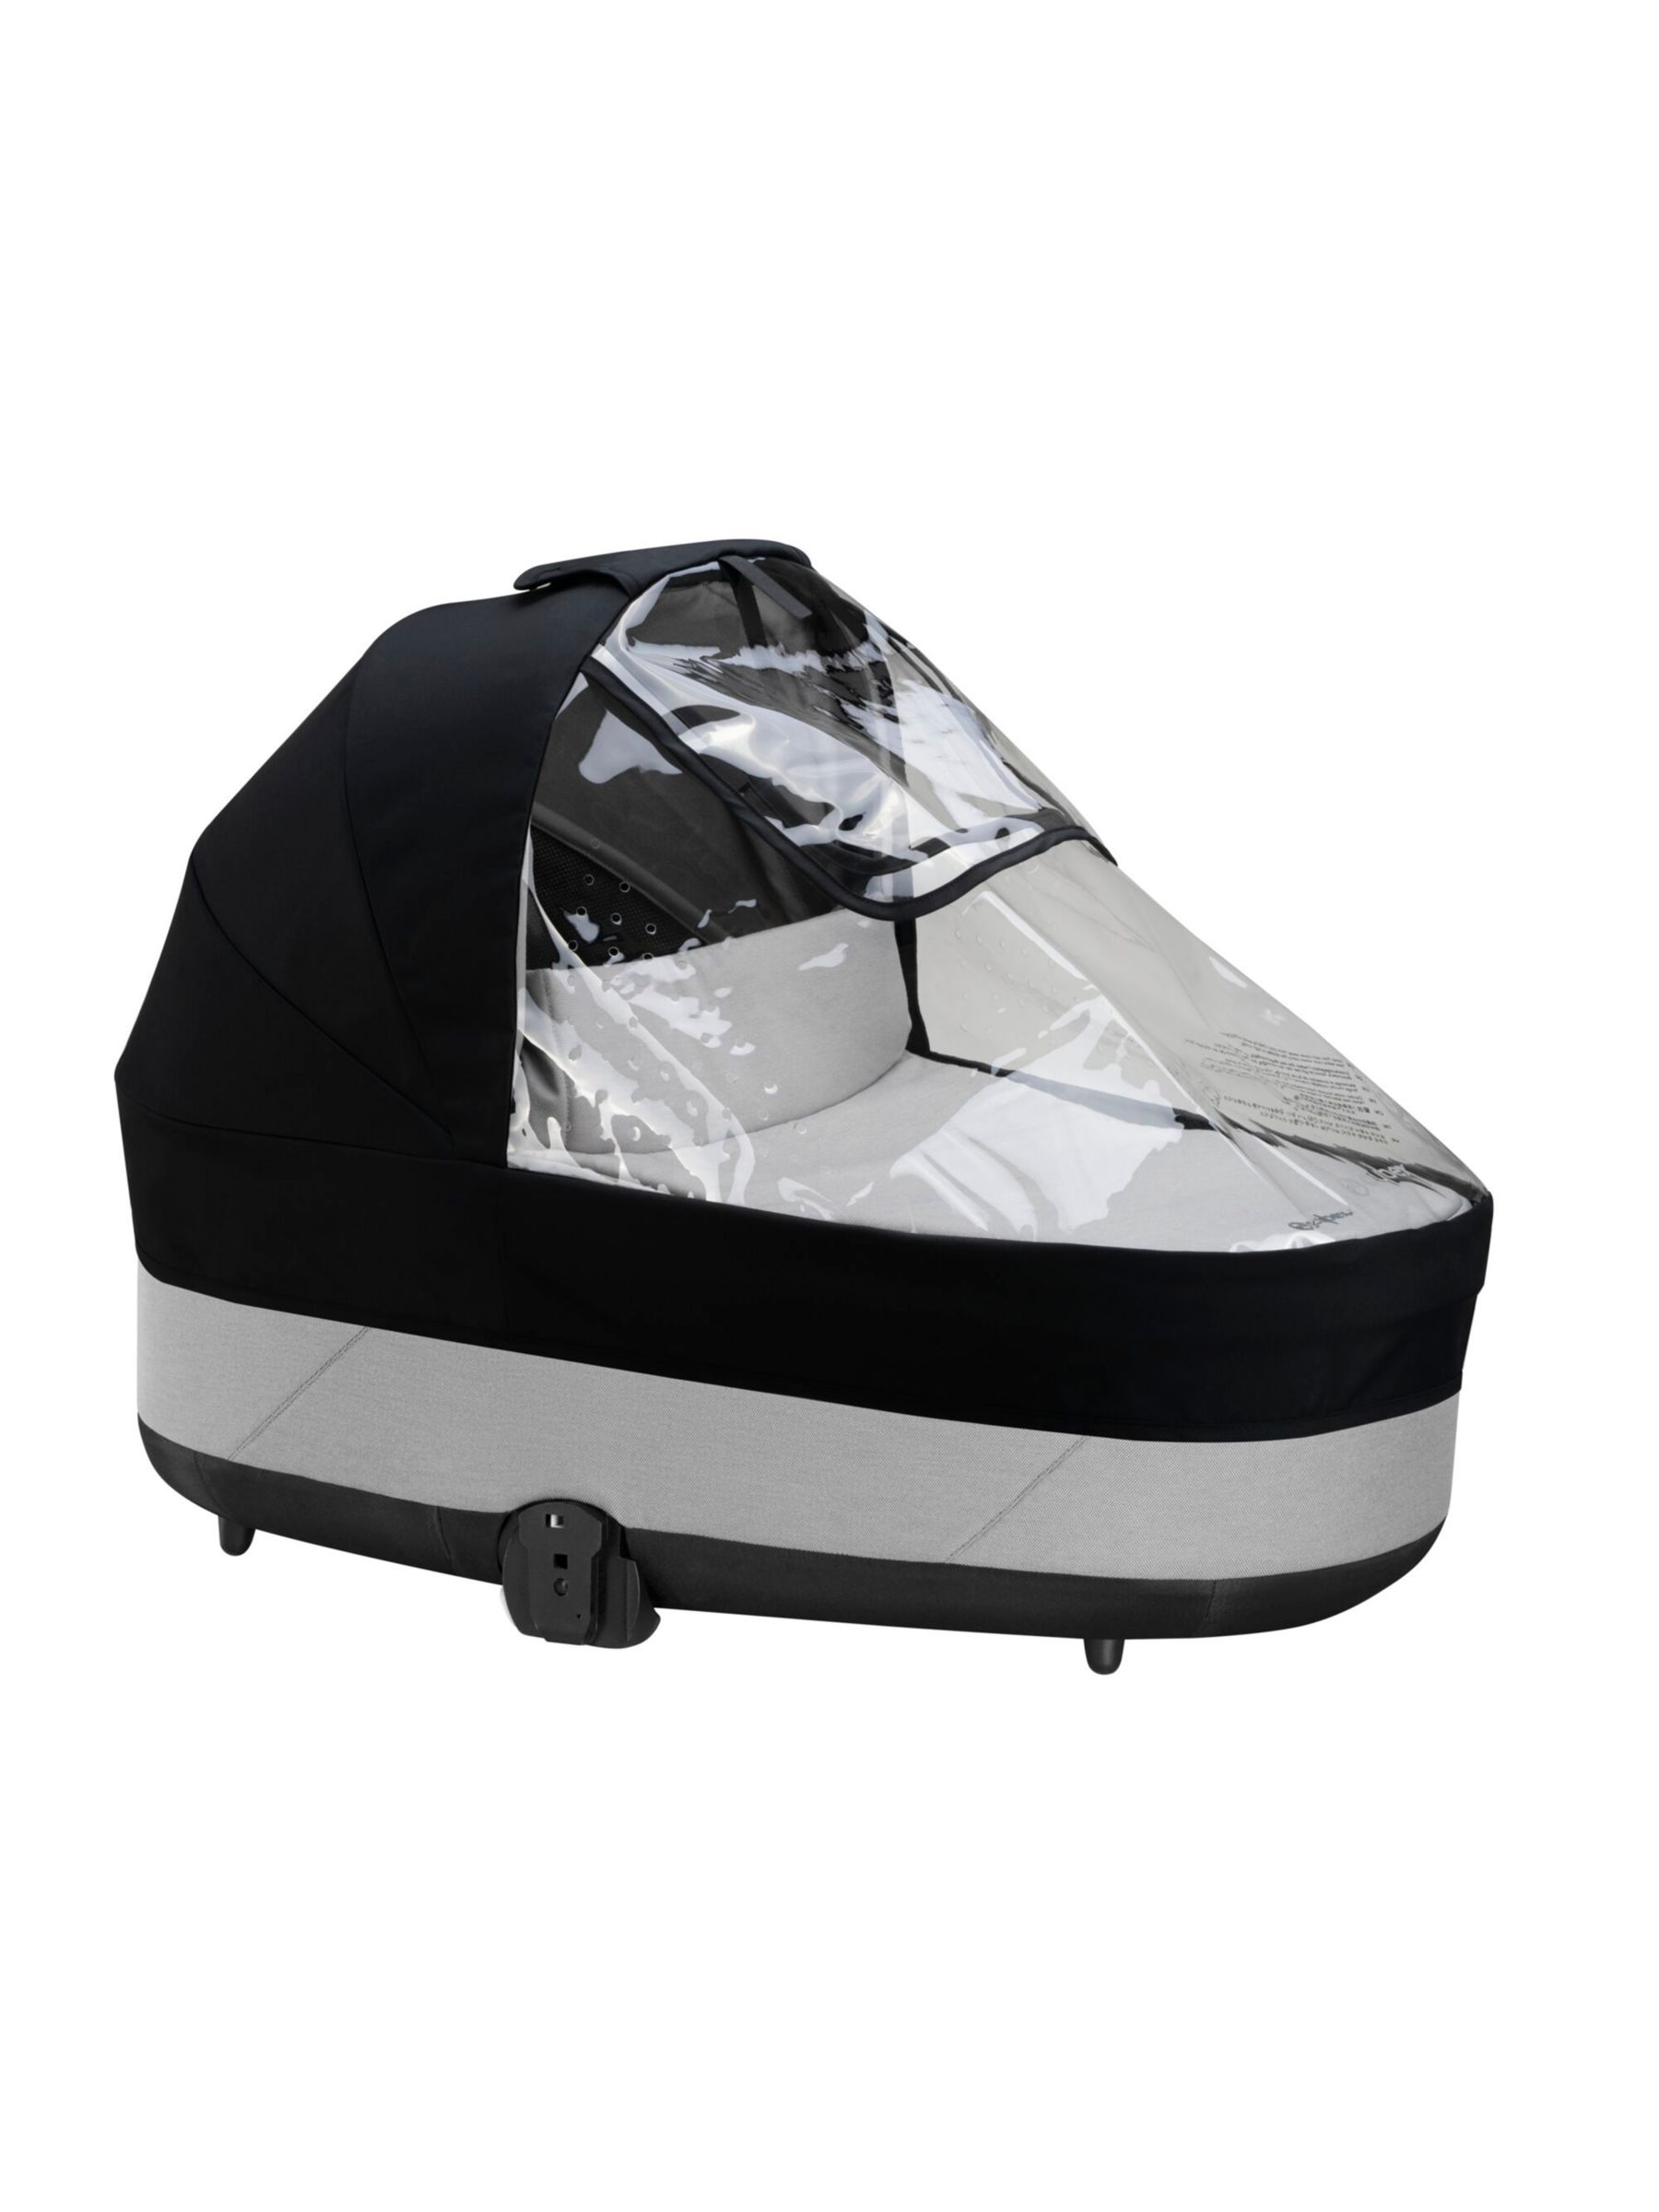 Cybex Balios S Lux Pushchair, Carrycot & Accessories with Cloud T & Base T Bundle, Moon Black